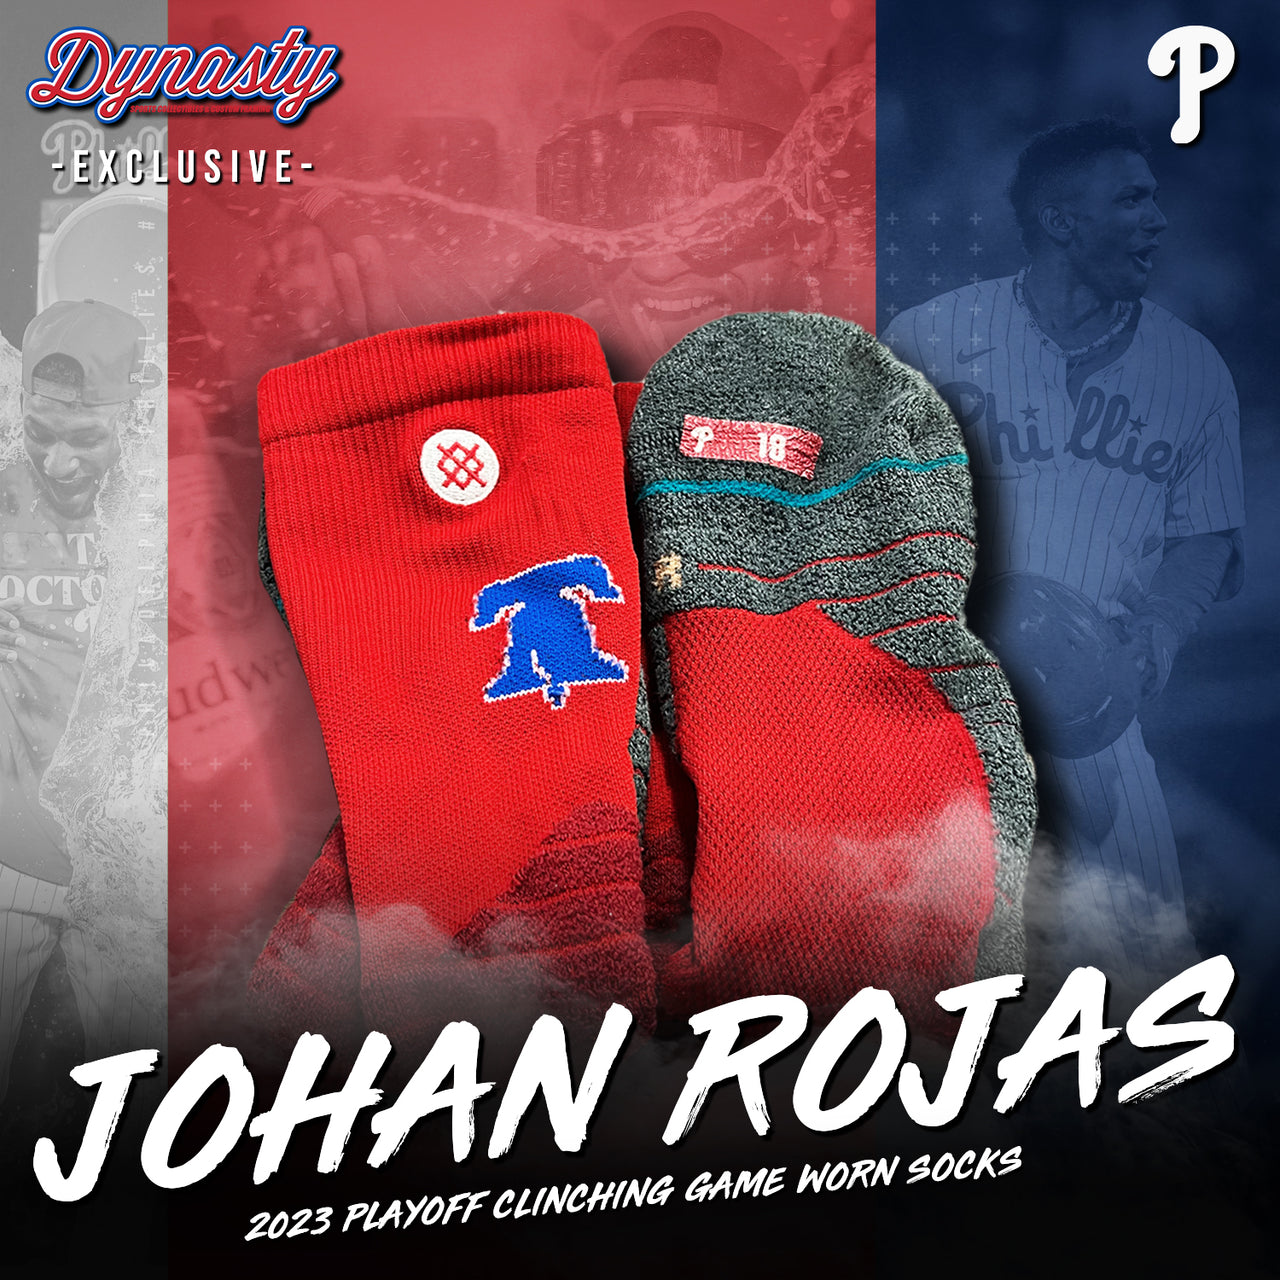 Johan Rojas Game-Worn Socks From Phillies Postseason Clinching Game